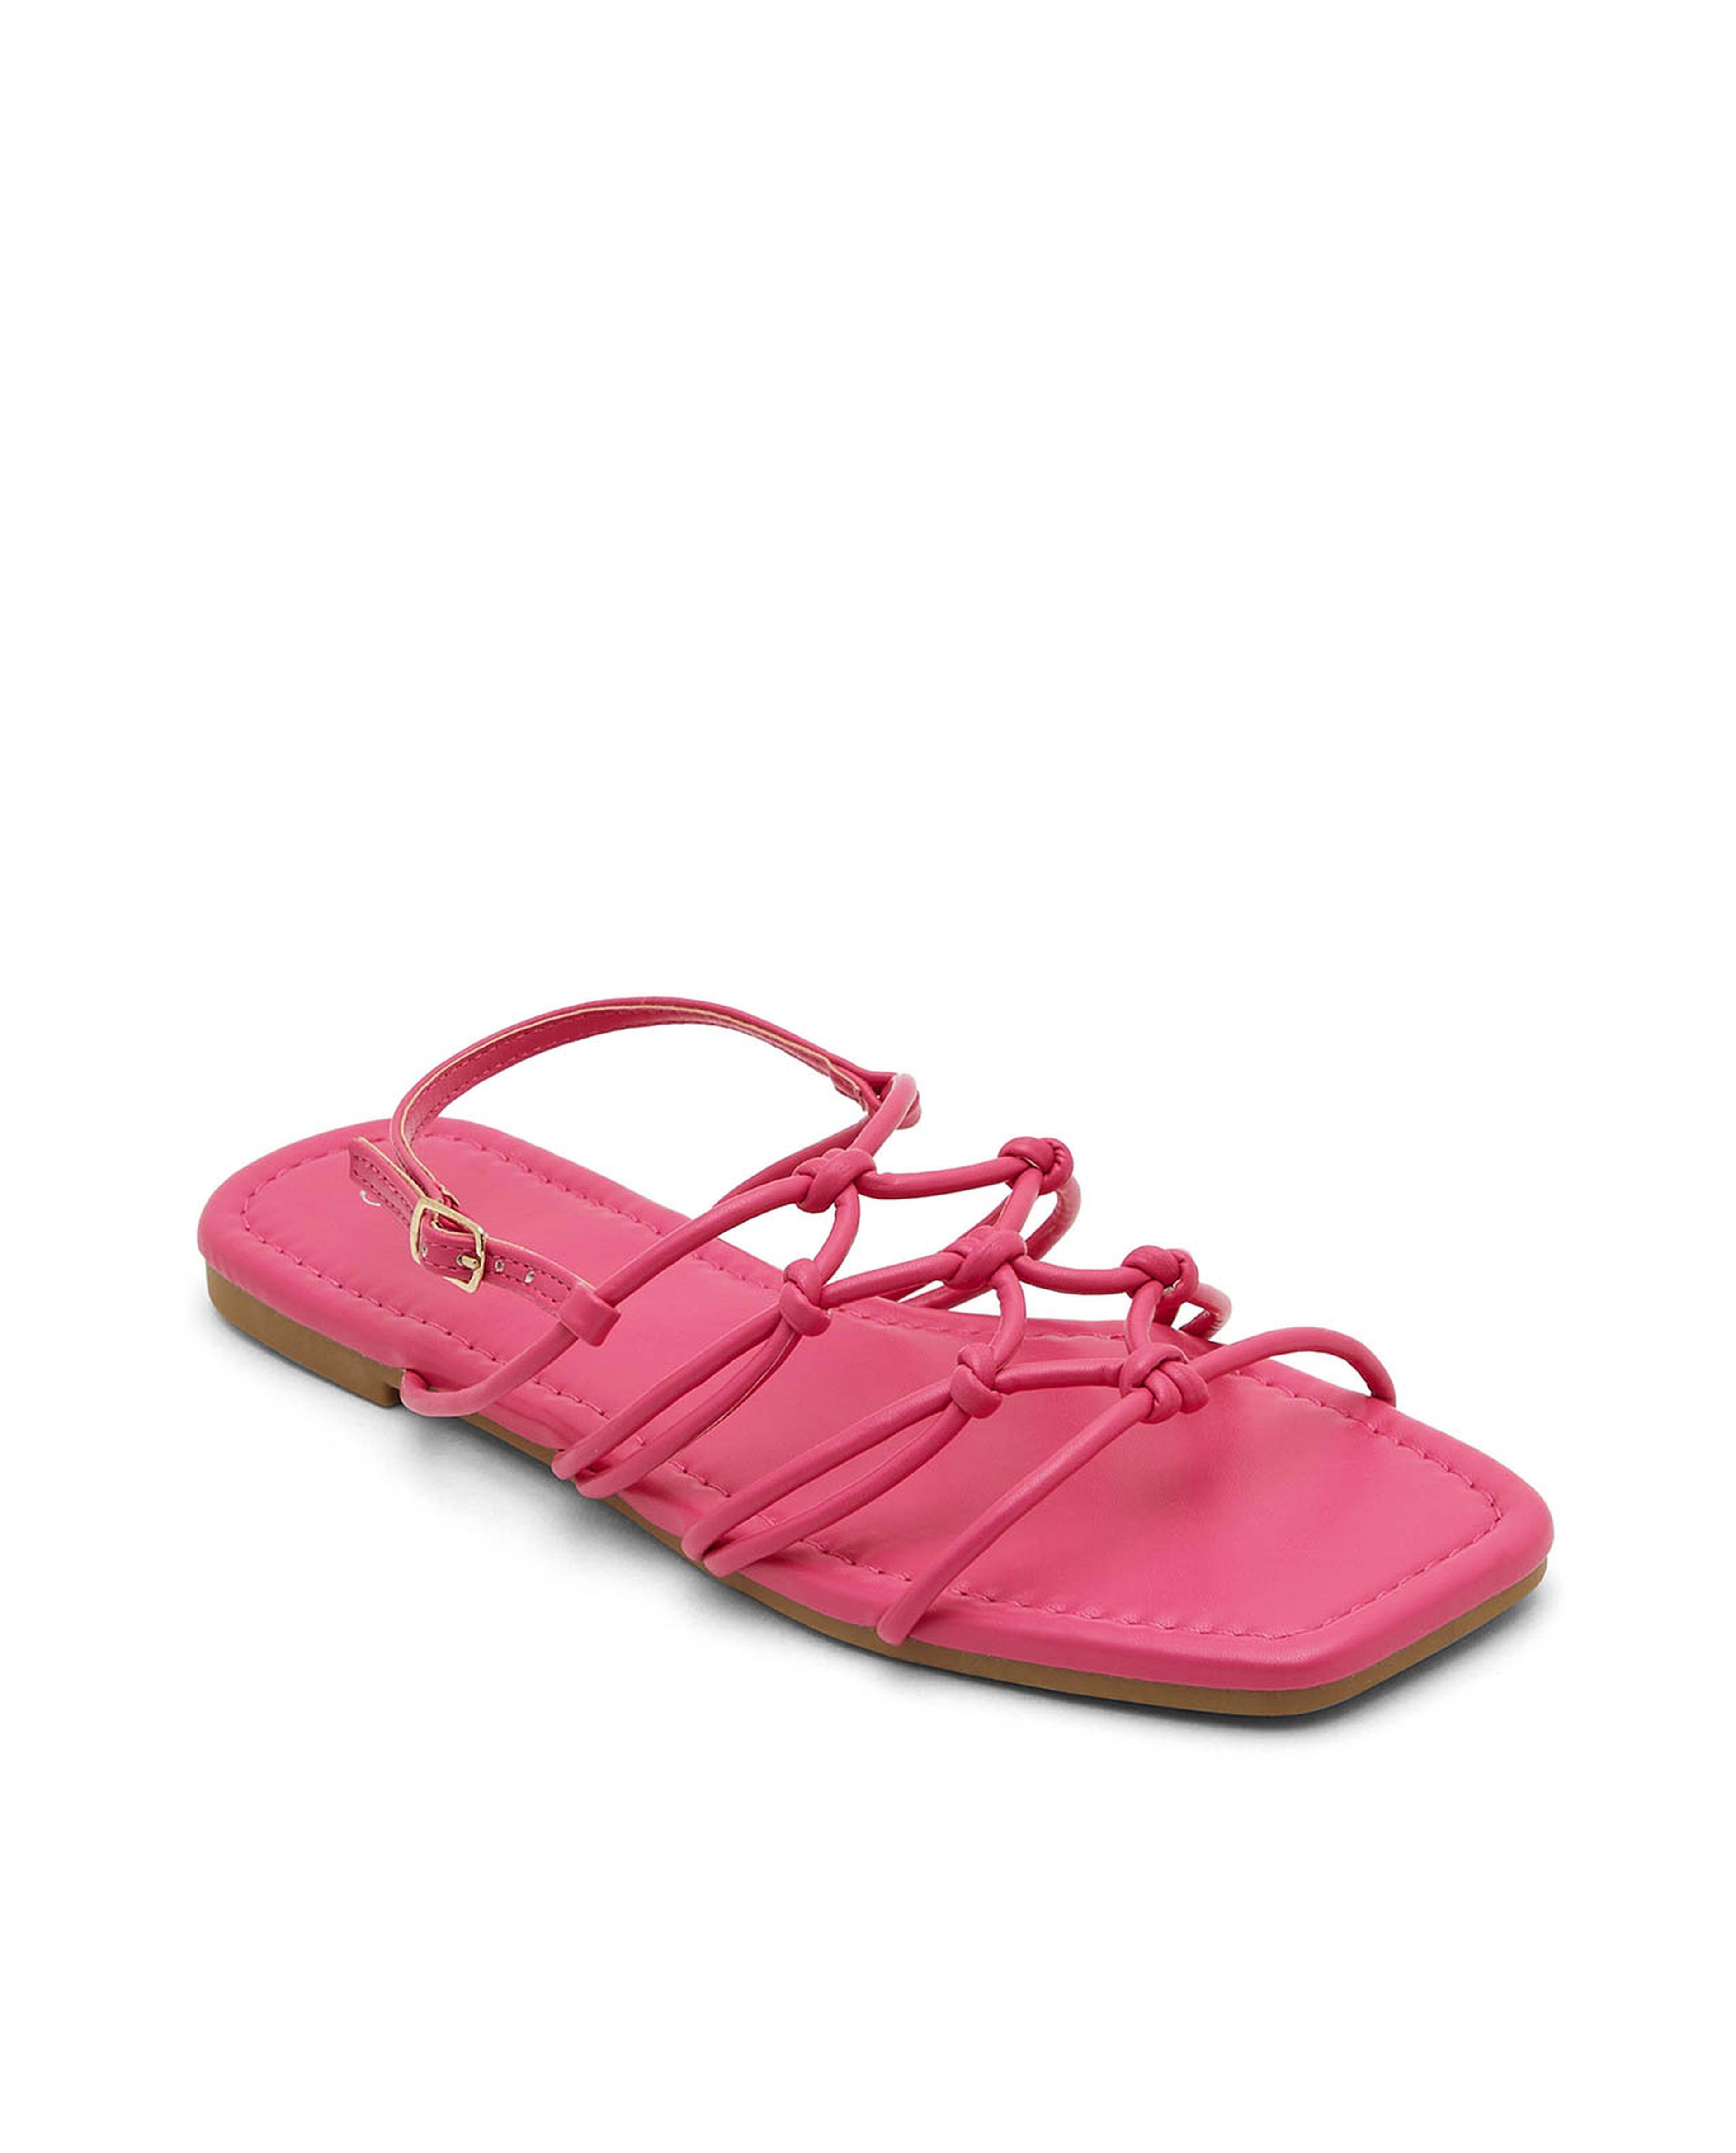 Buy Lace-up gladiator sandals Online in Dubai & the UAE|Kiabi